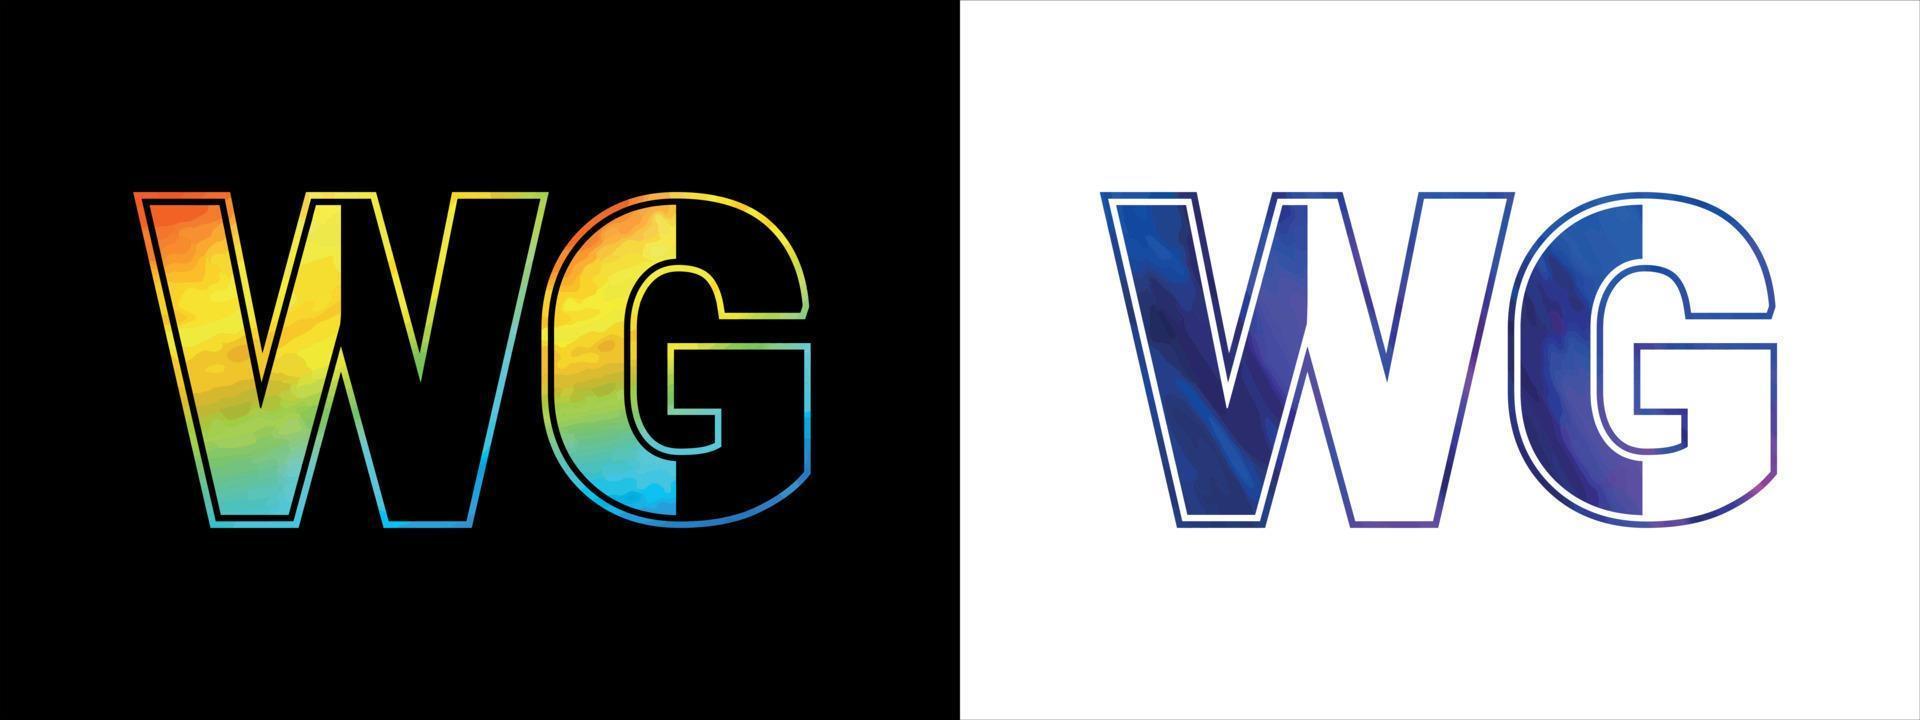 letra wg logo diseño vector modelo. creativo moderno lujoso logotipo para corporativo negocio identidad